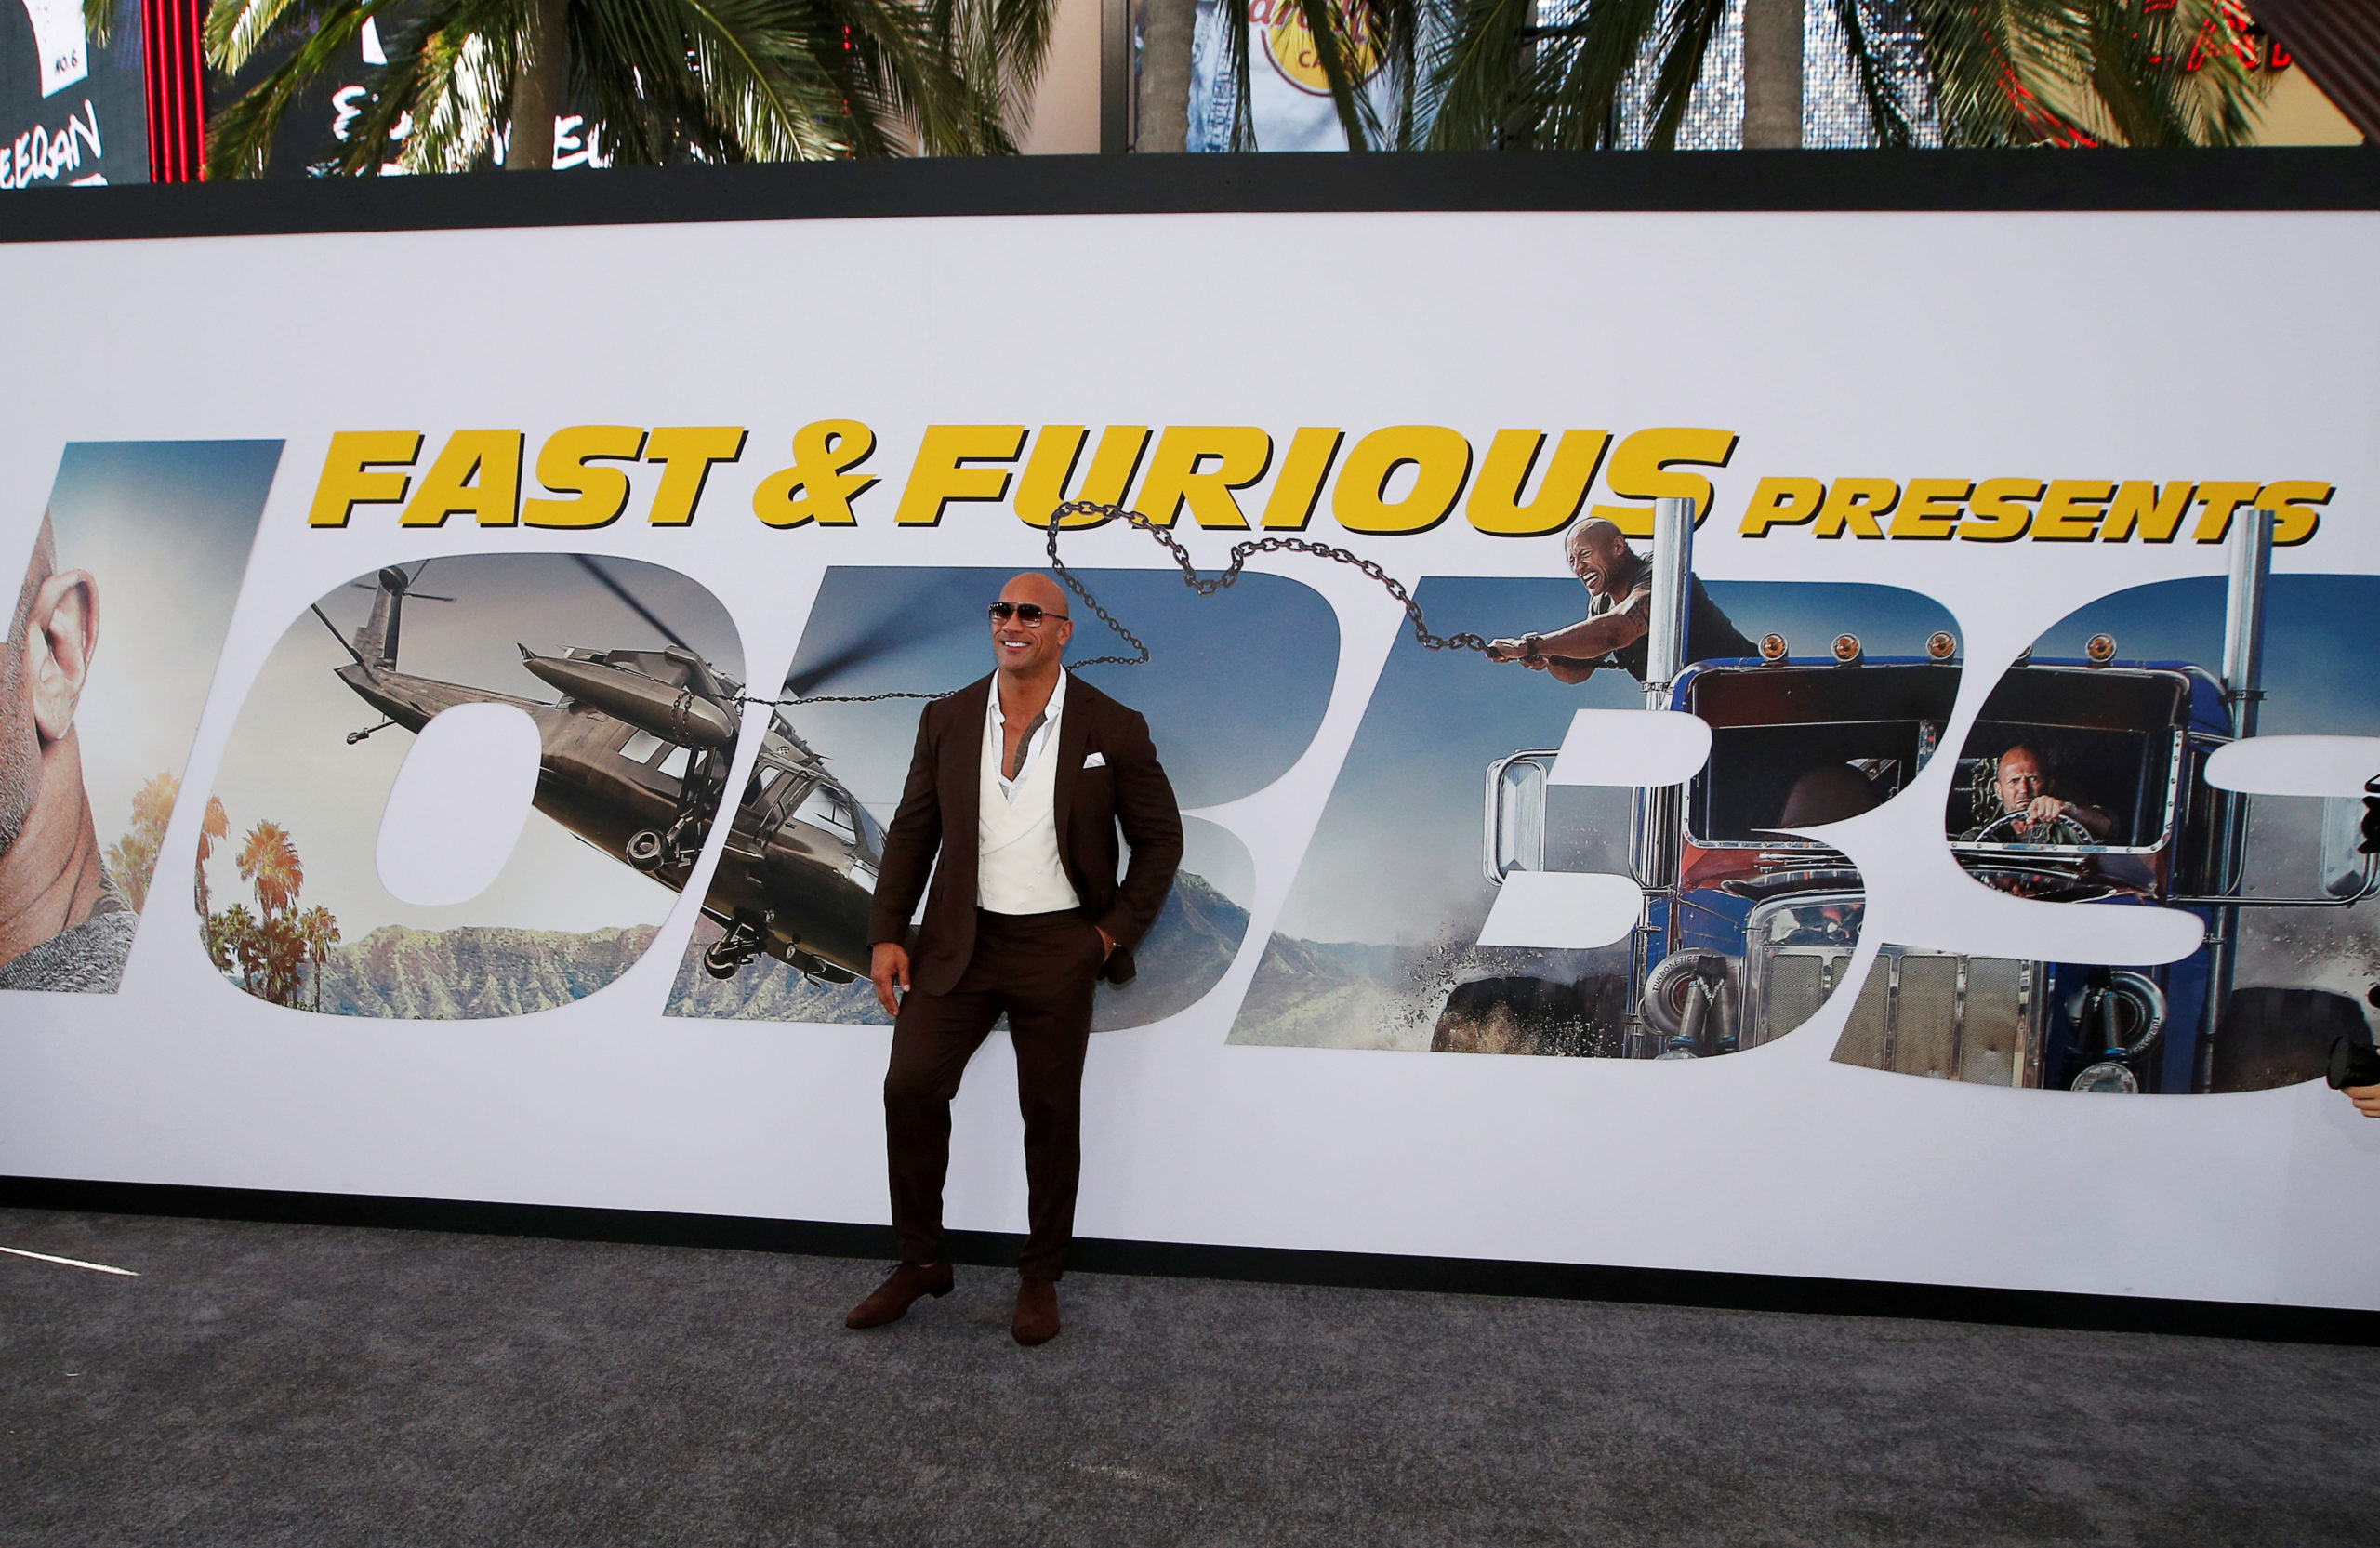 Next 'Fast & Furious' movie delayed until June